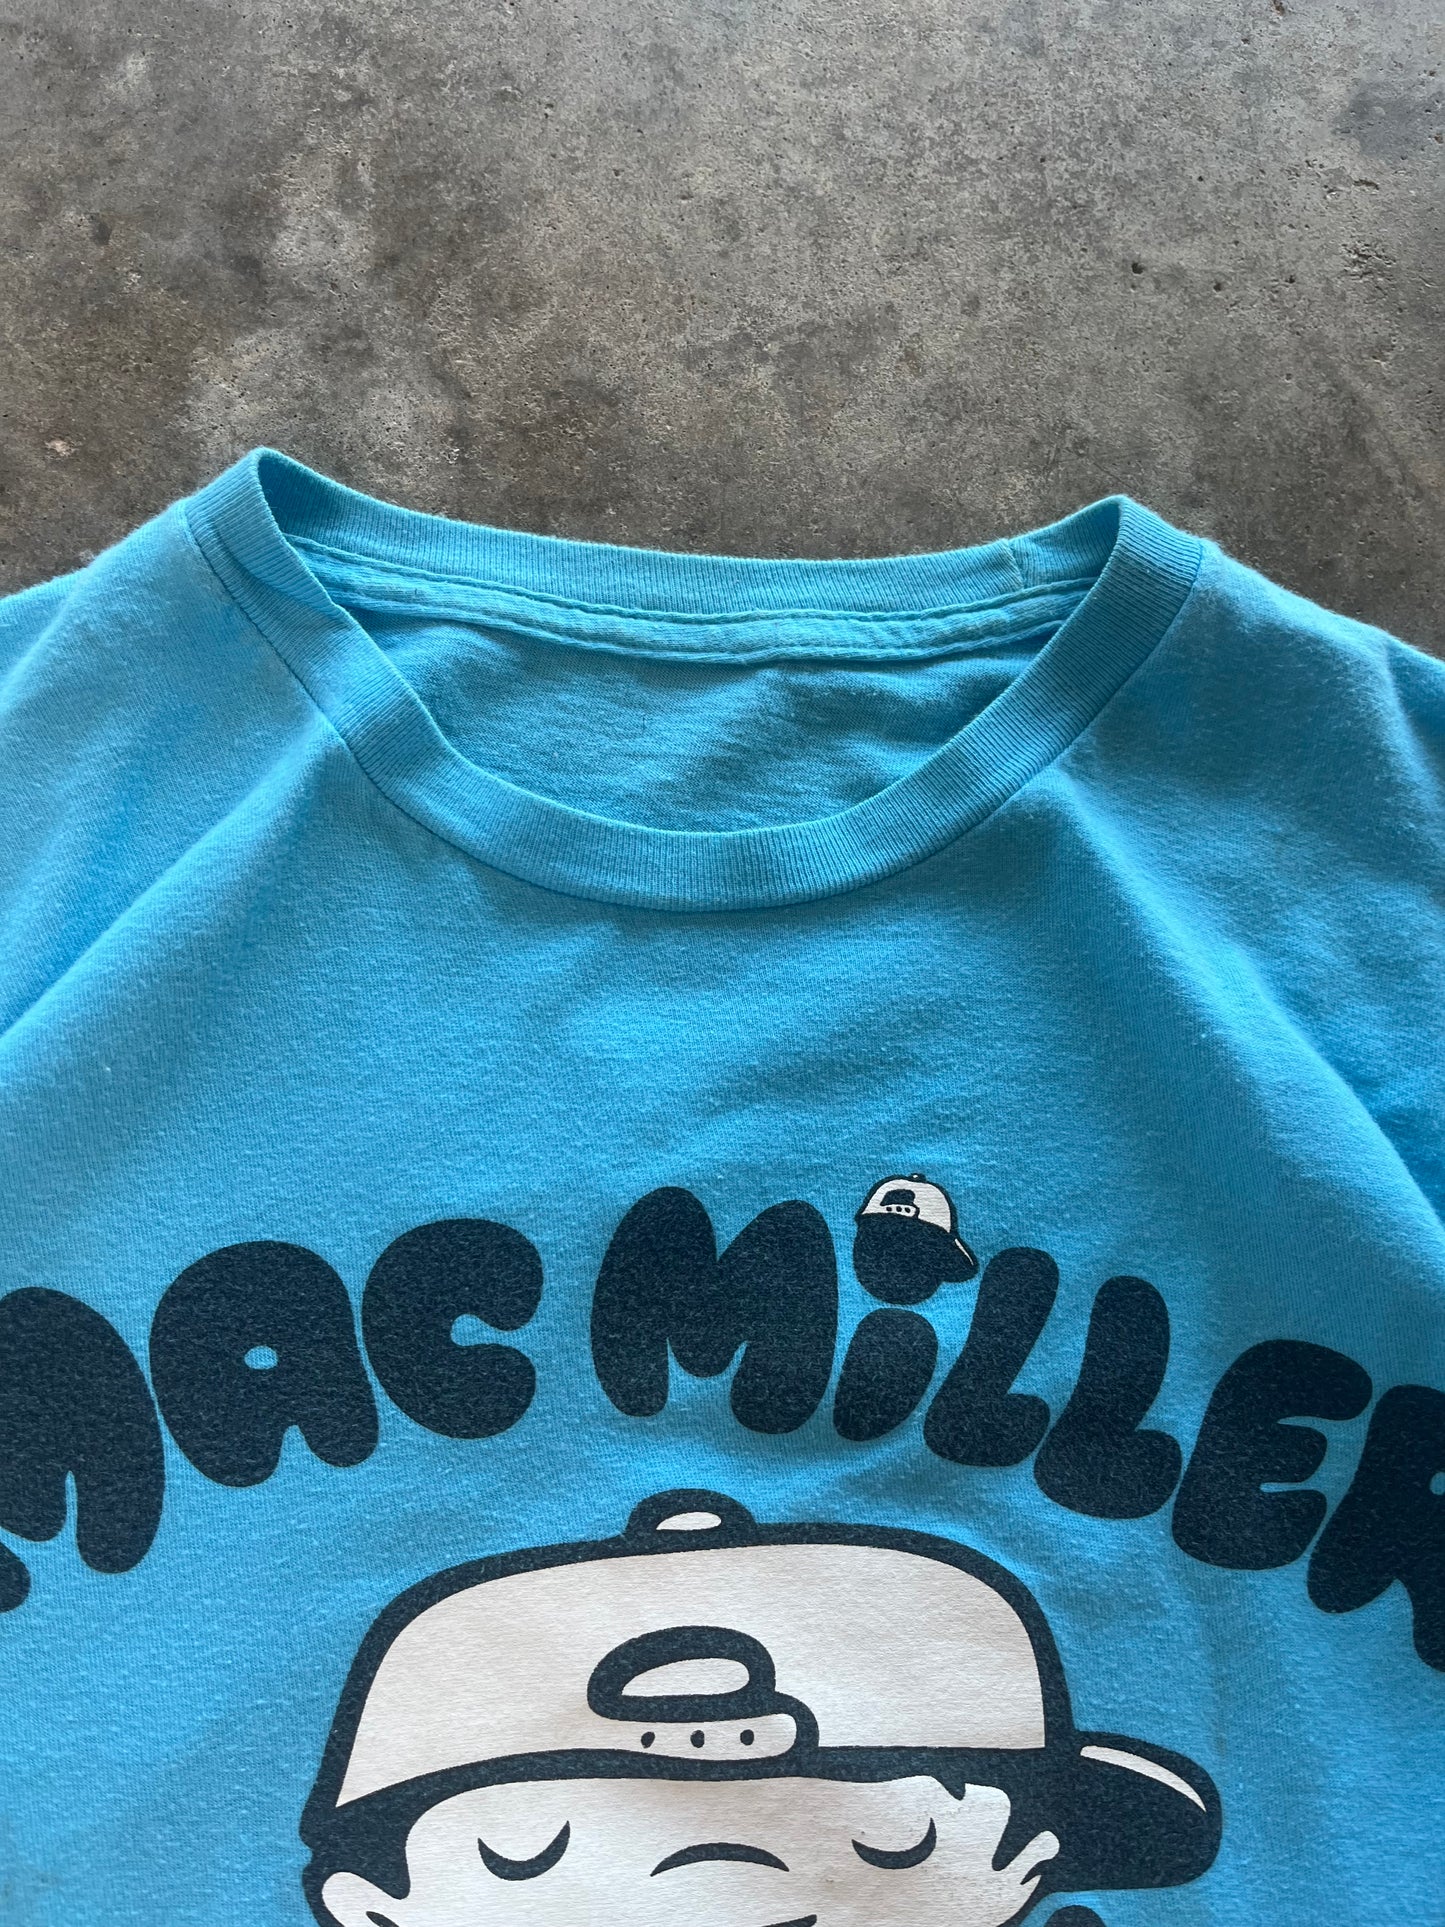 (L) 00s Mac Miller Tee